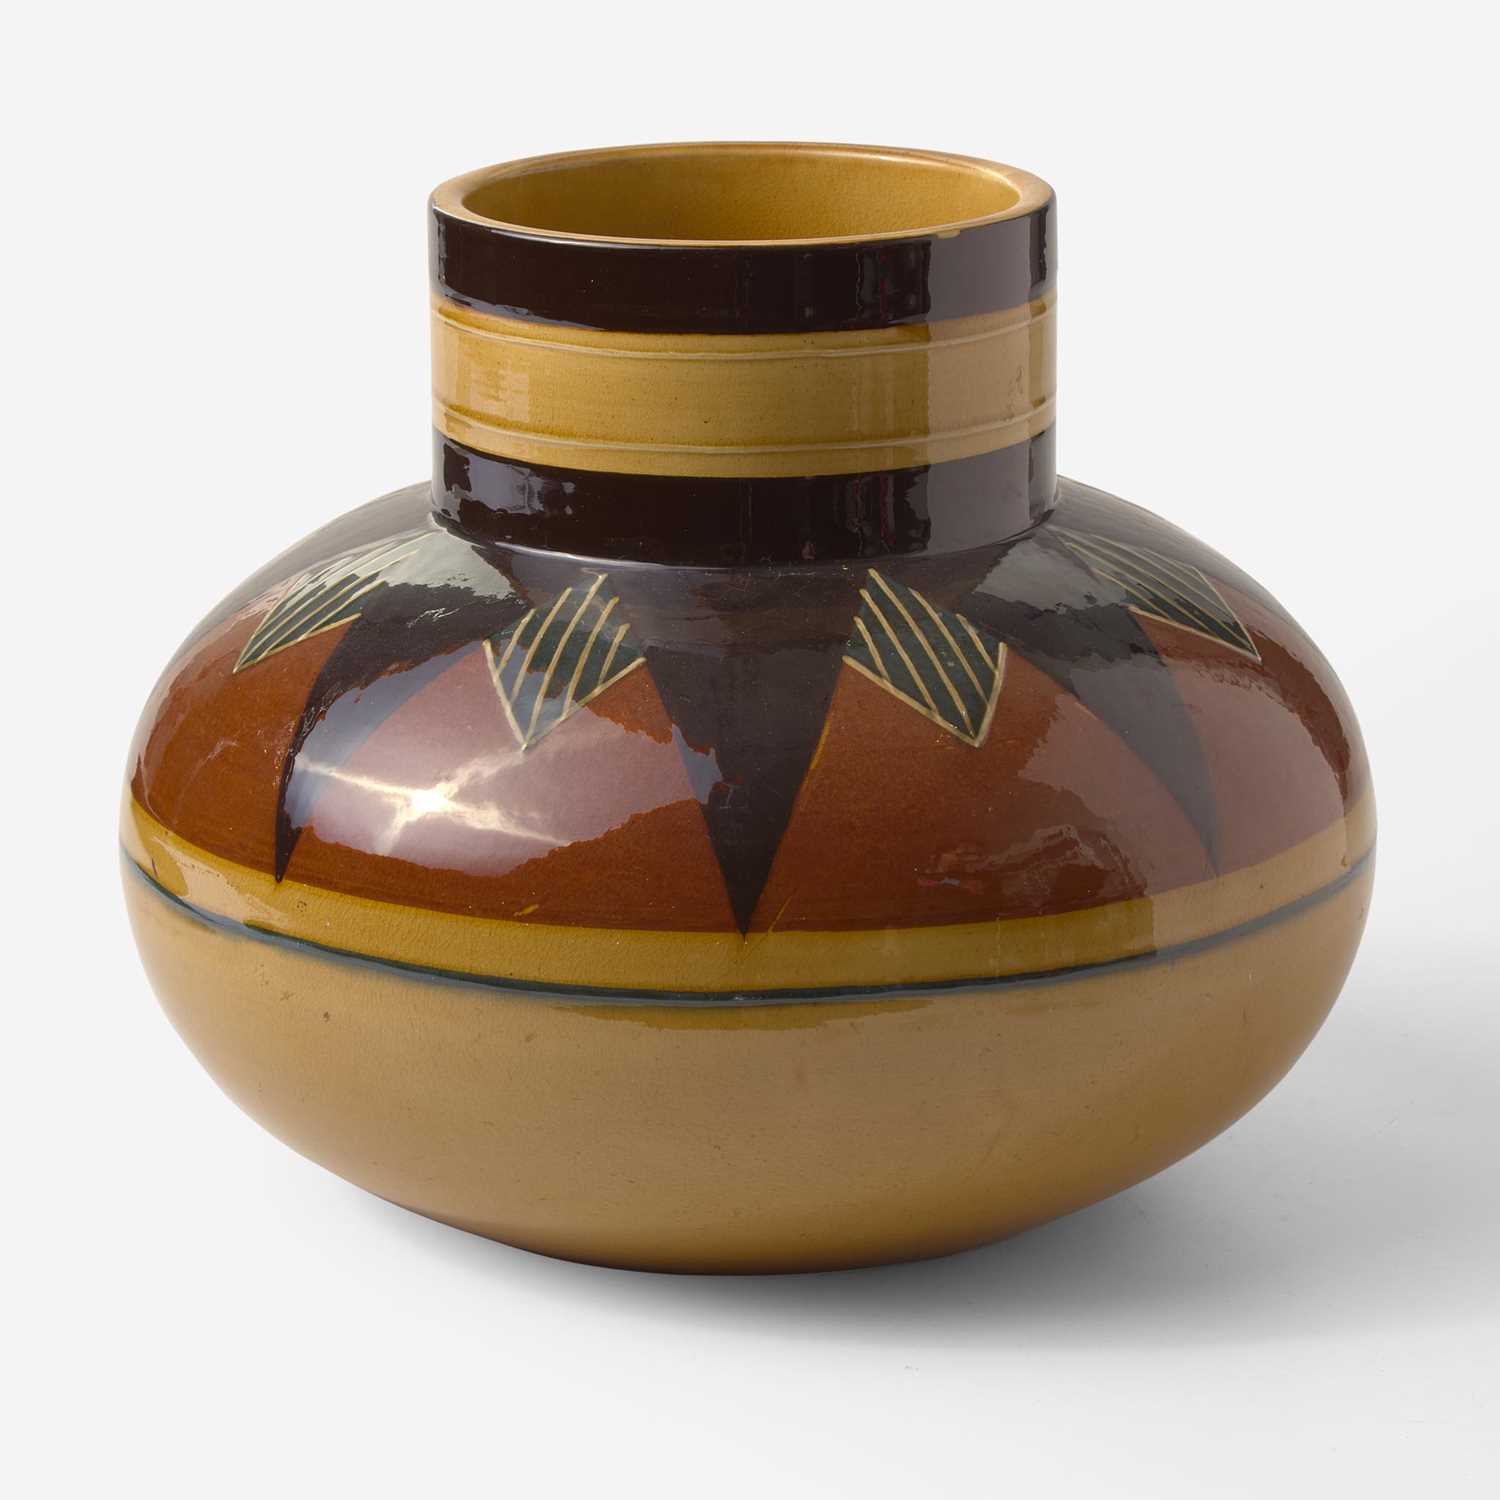 Lot 148 - A Wedgwood Art Ware Vase Designed by George Marsden